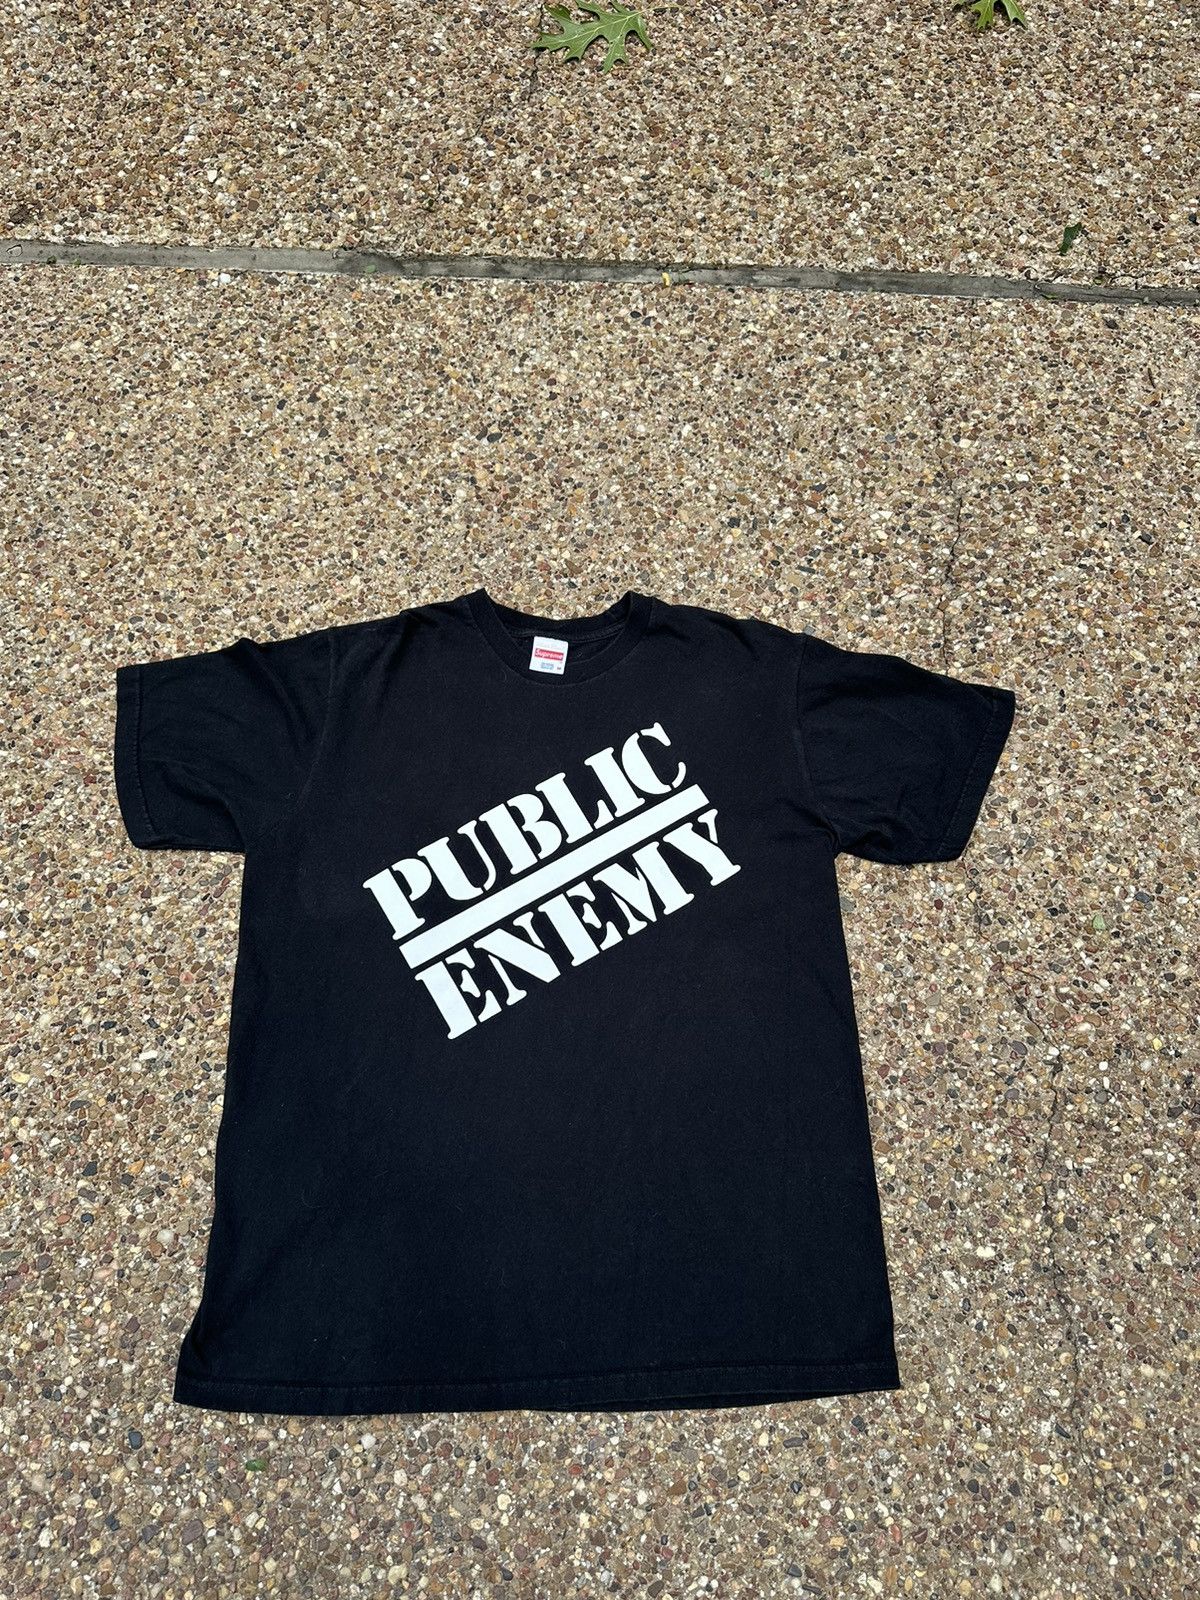 Pre-owned Public Enemy X Supreme Public Enemy “blow Your Mind” Shirt In Black